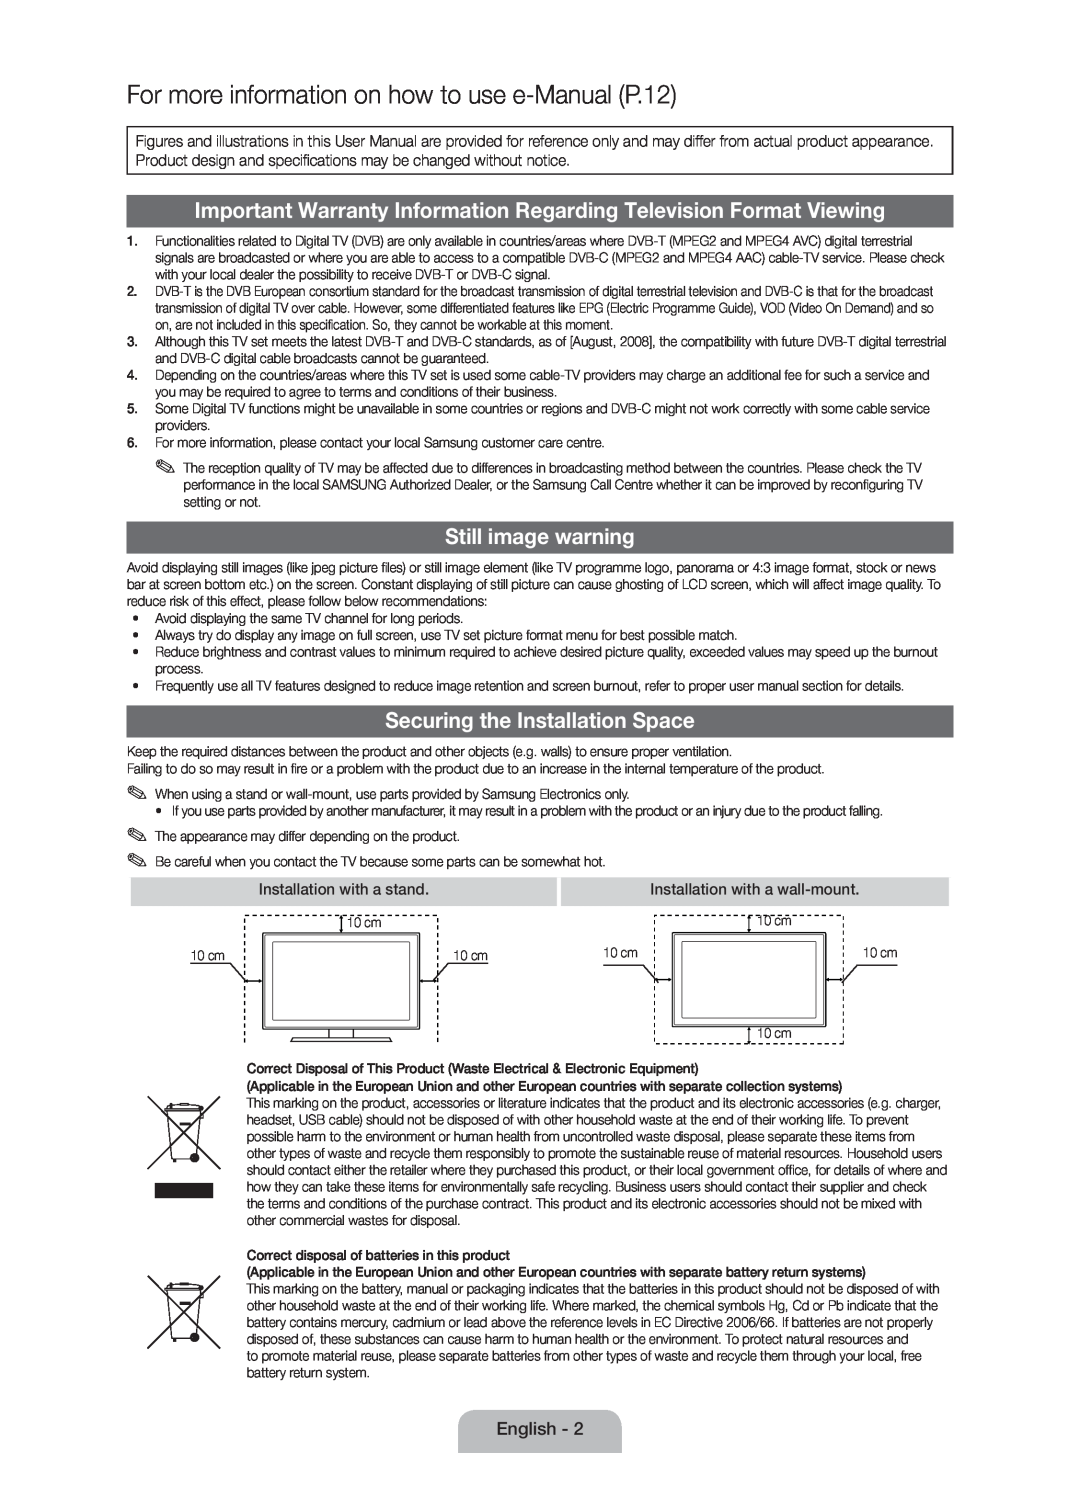 Samsung Series 5 user manual Important Warranty Information Regarding Television Format Viewing, Still image warning 